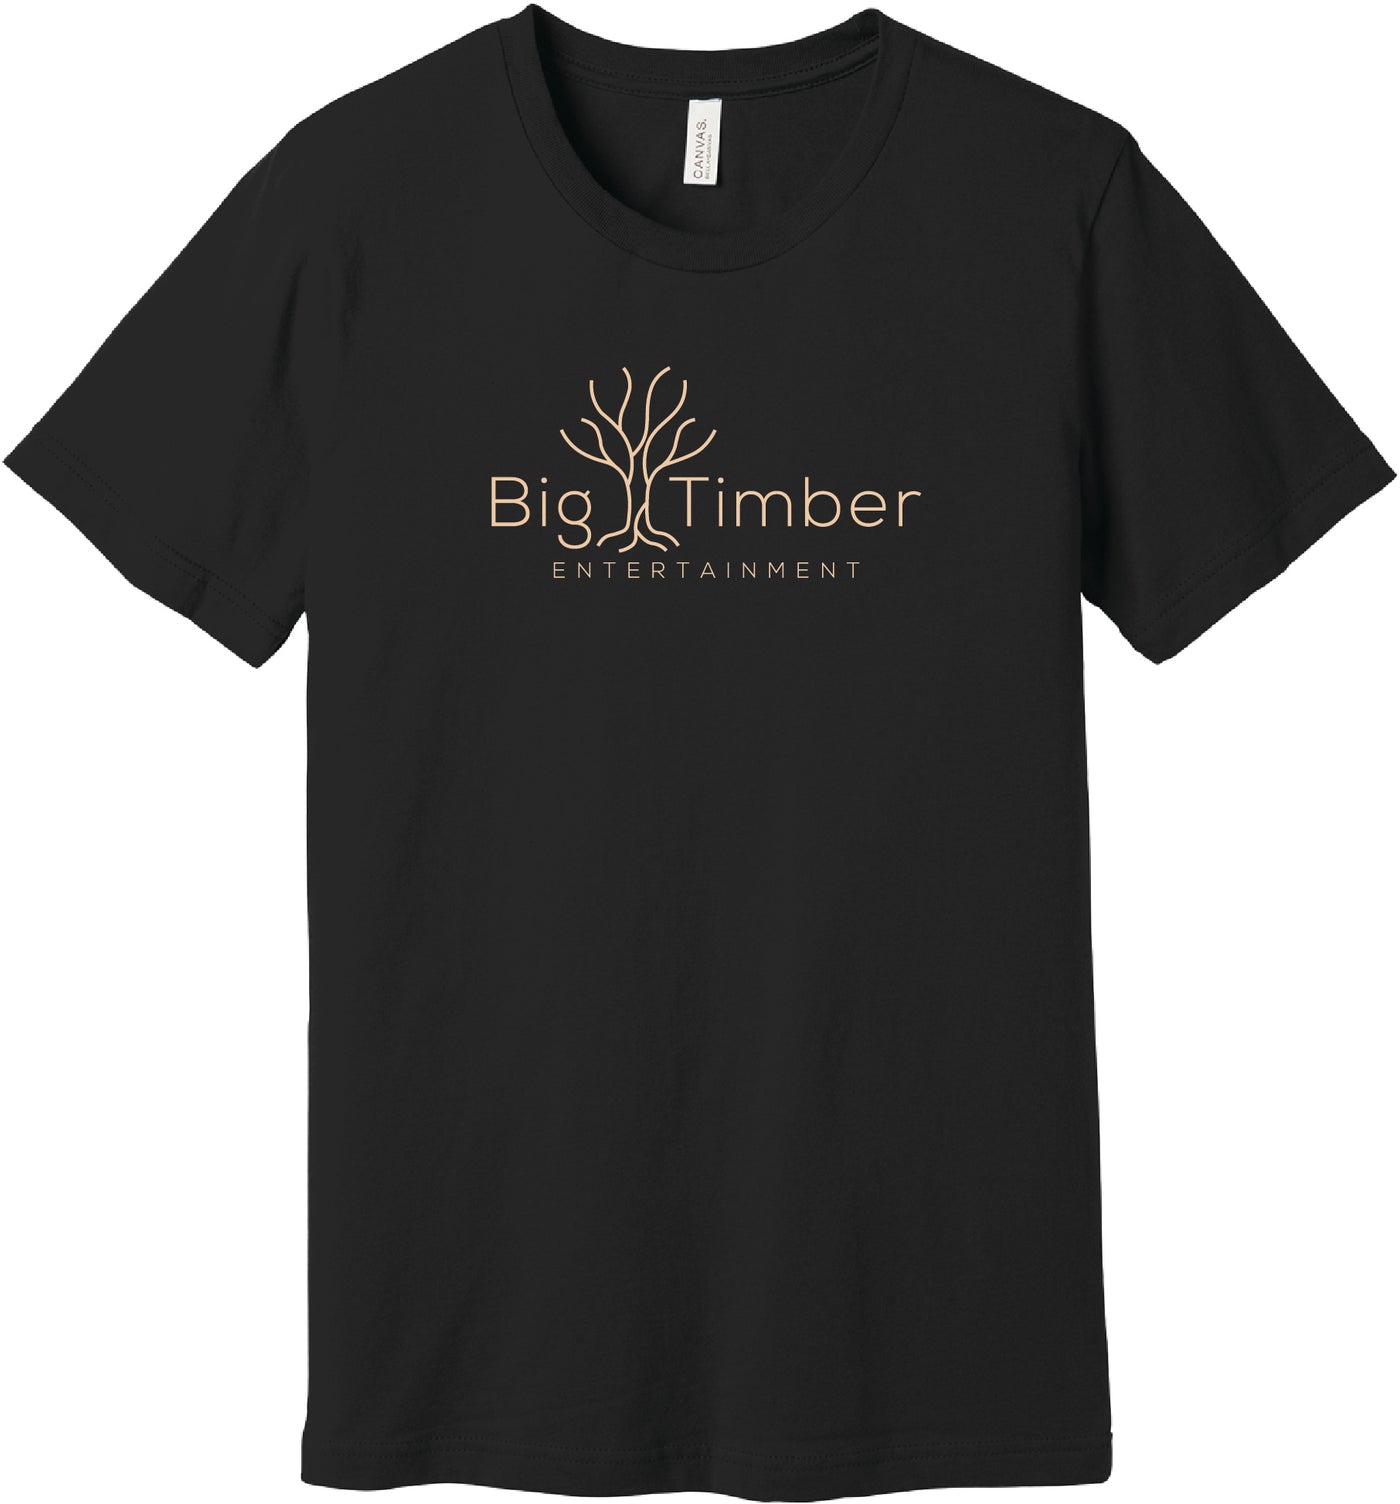 Big Timber Entertainment T Shirt. Free Shipping!